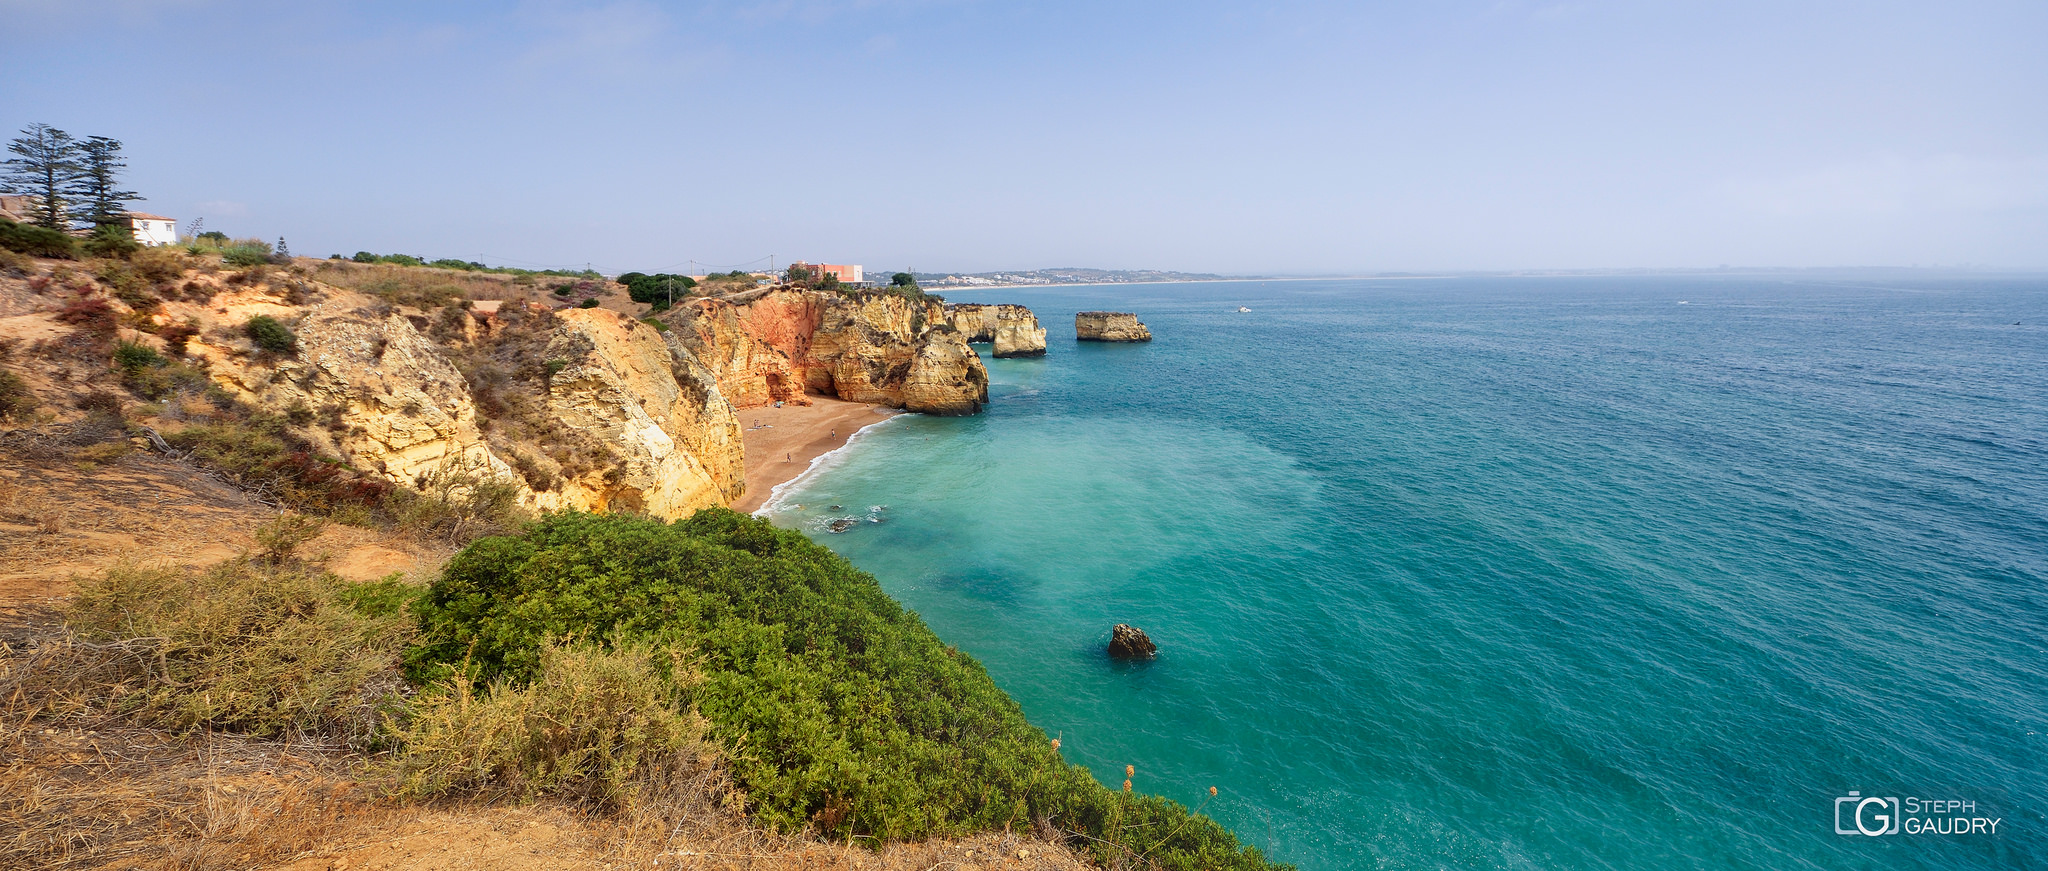 Les falaises d'Algarve [Click to start slideshow]